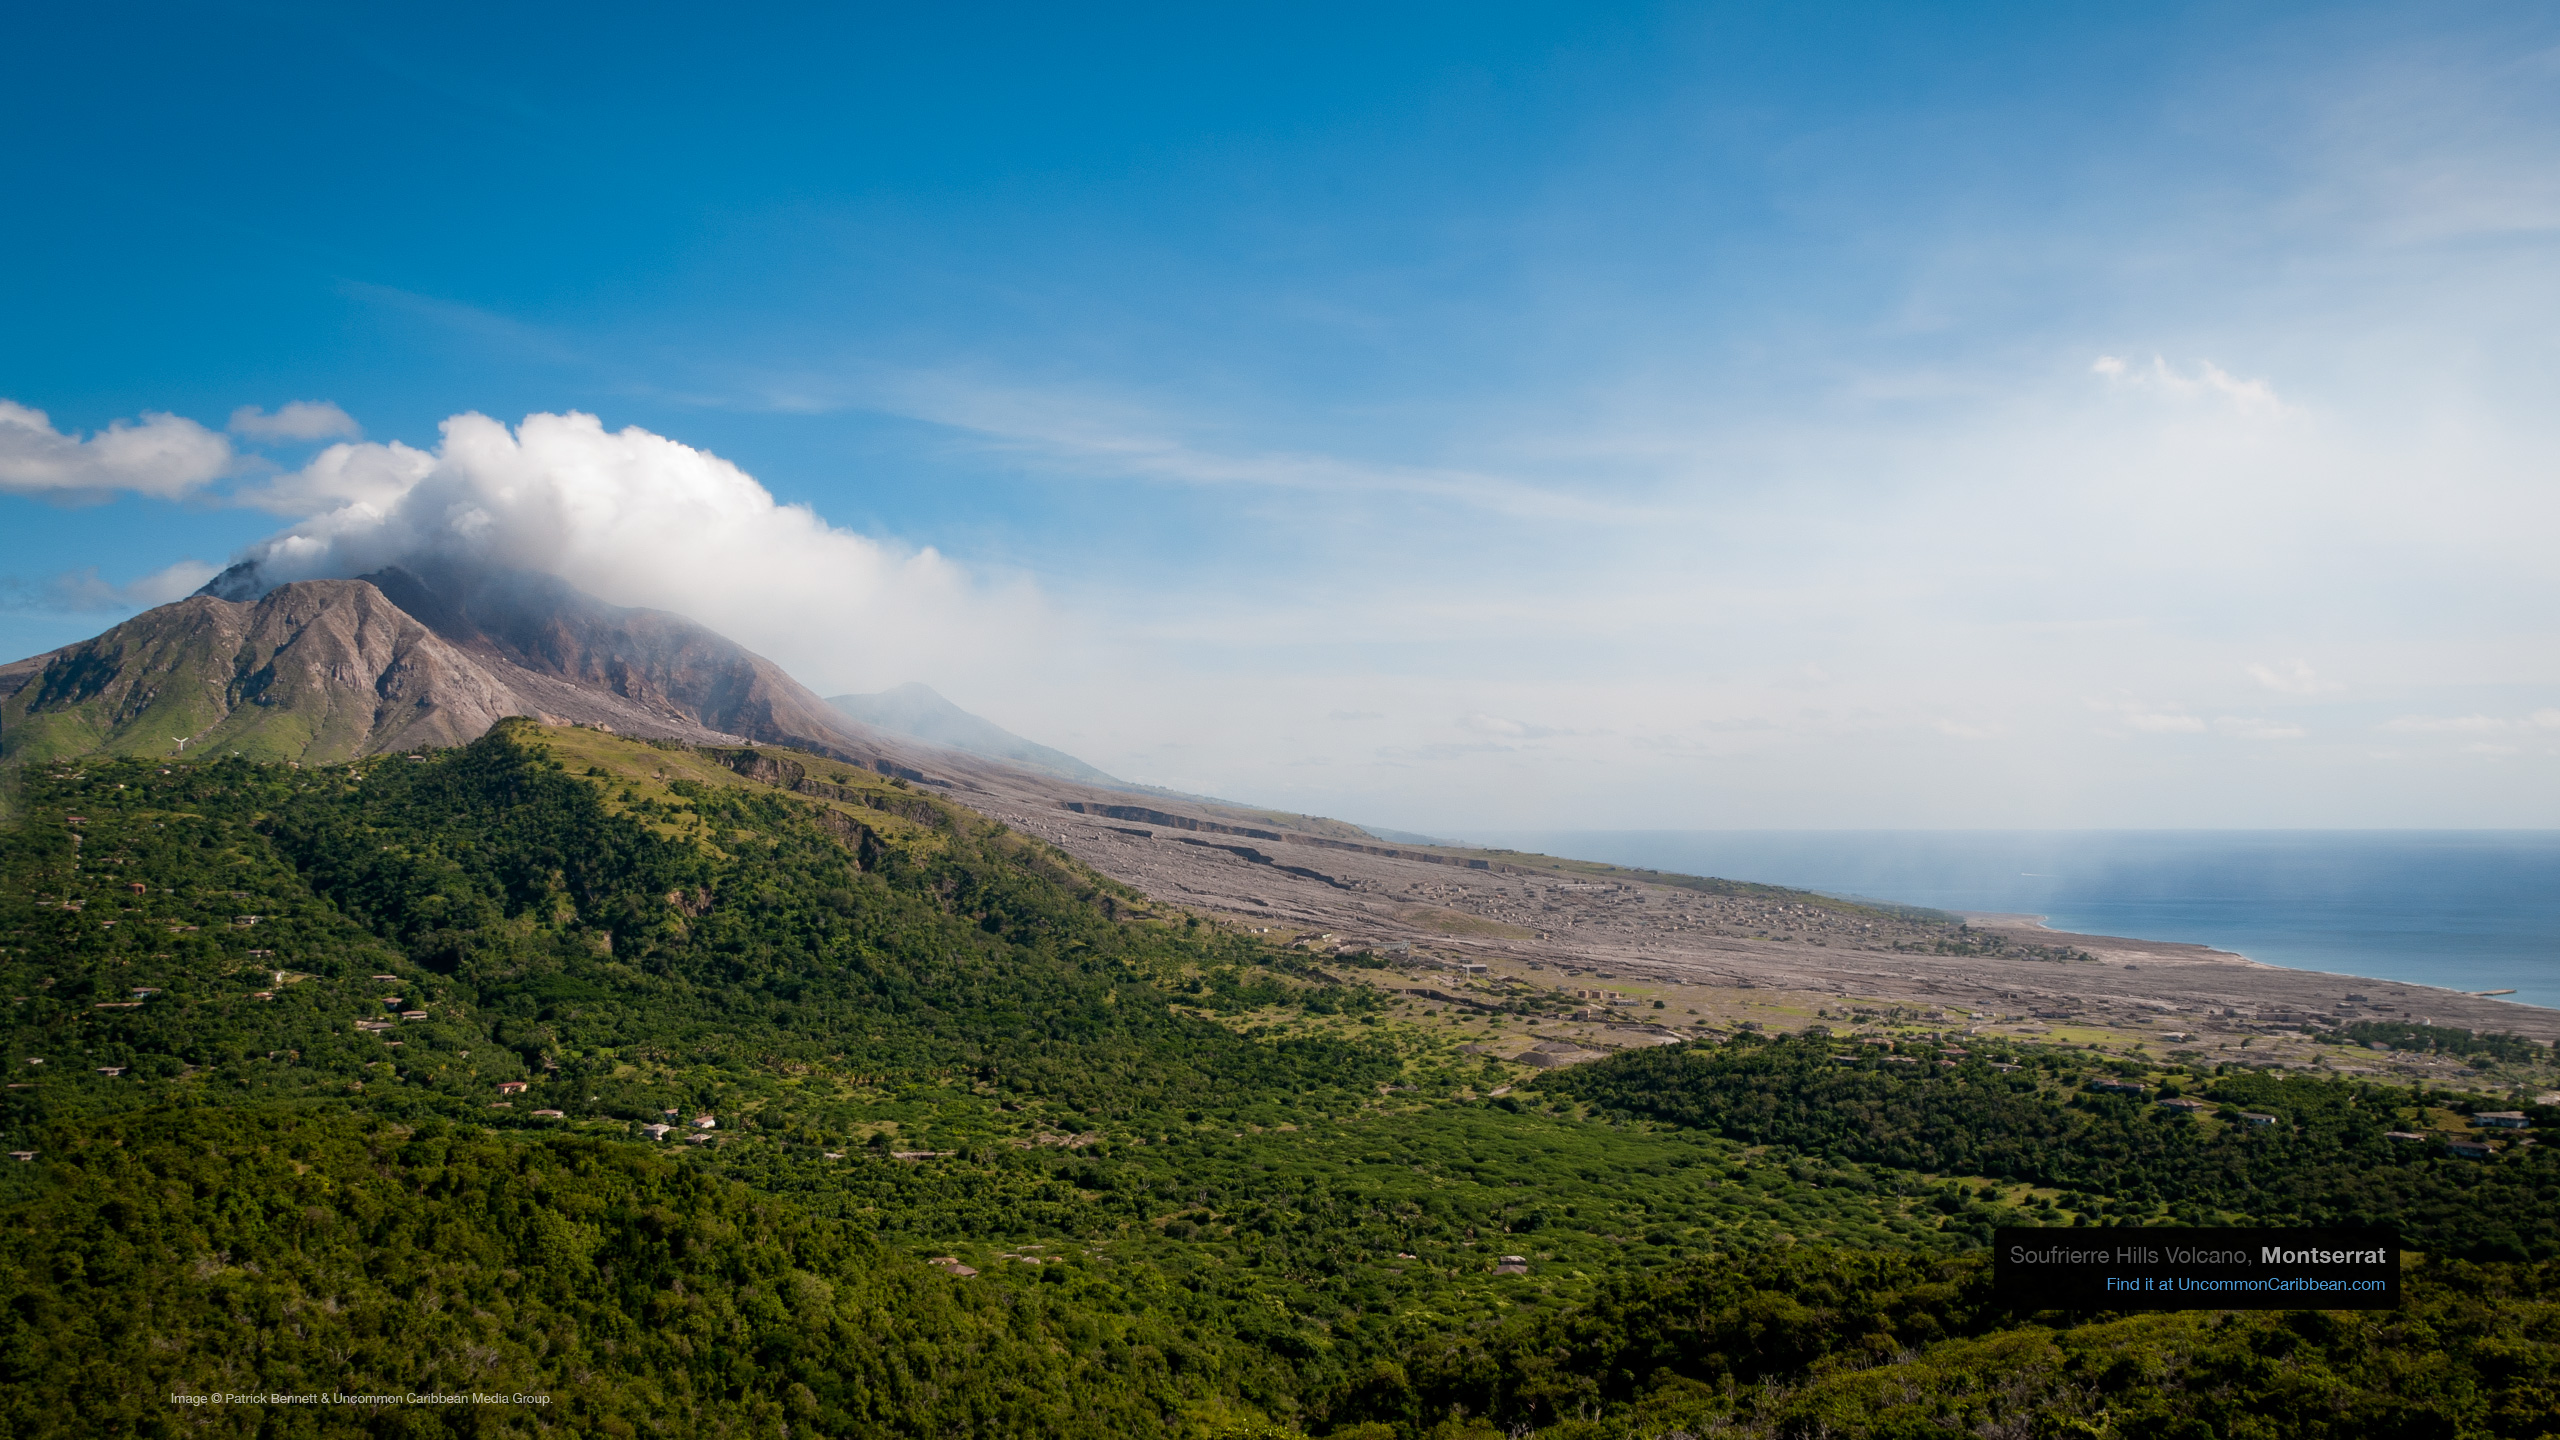 Soufrierre Hills Volcano, Montserrat by Patrick Bennett